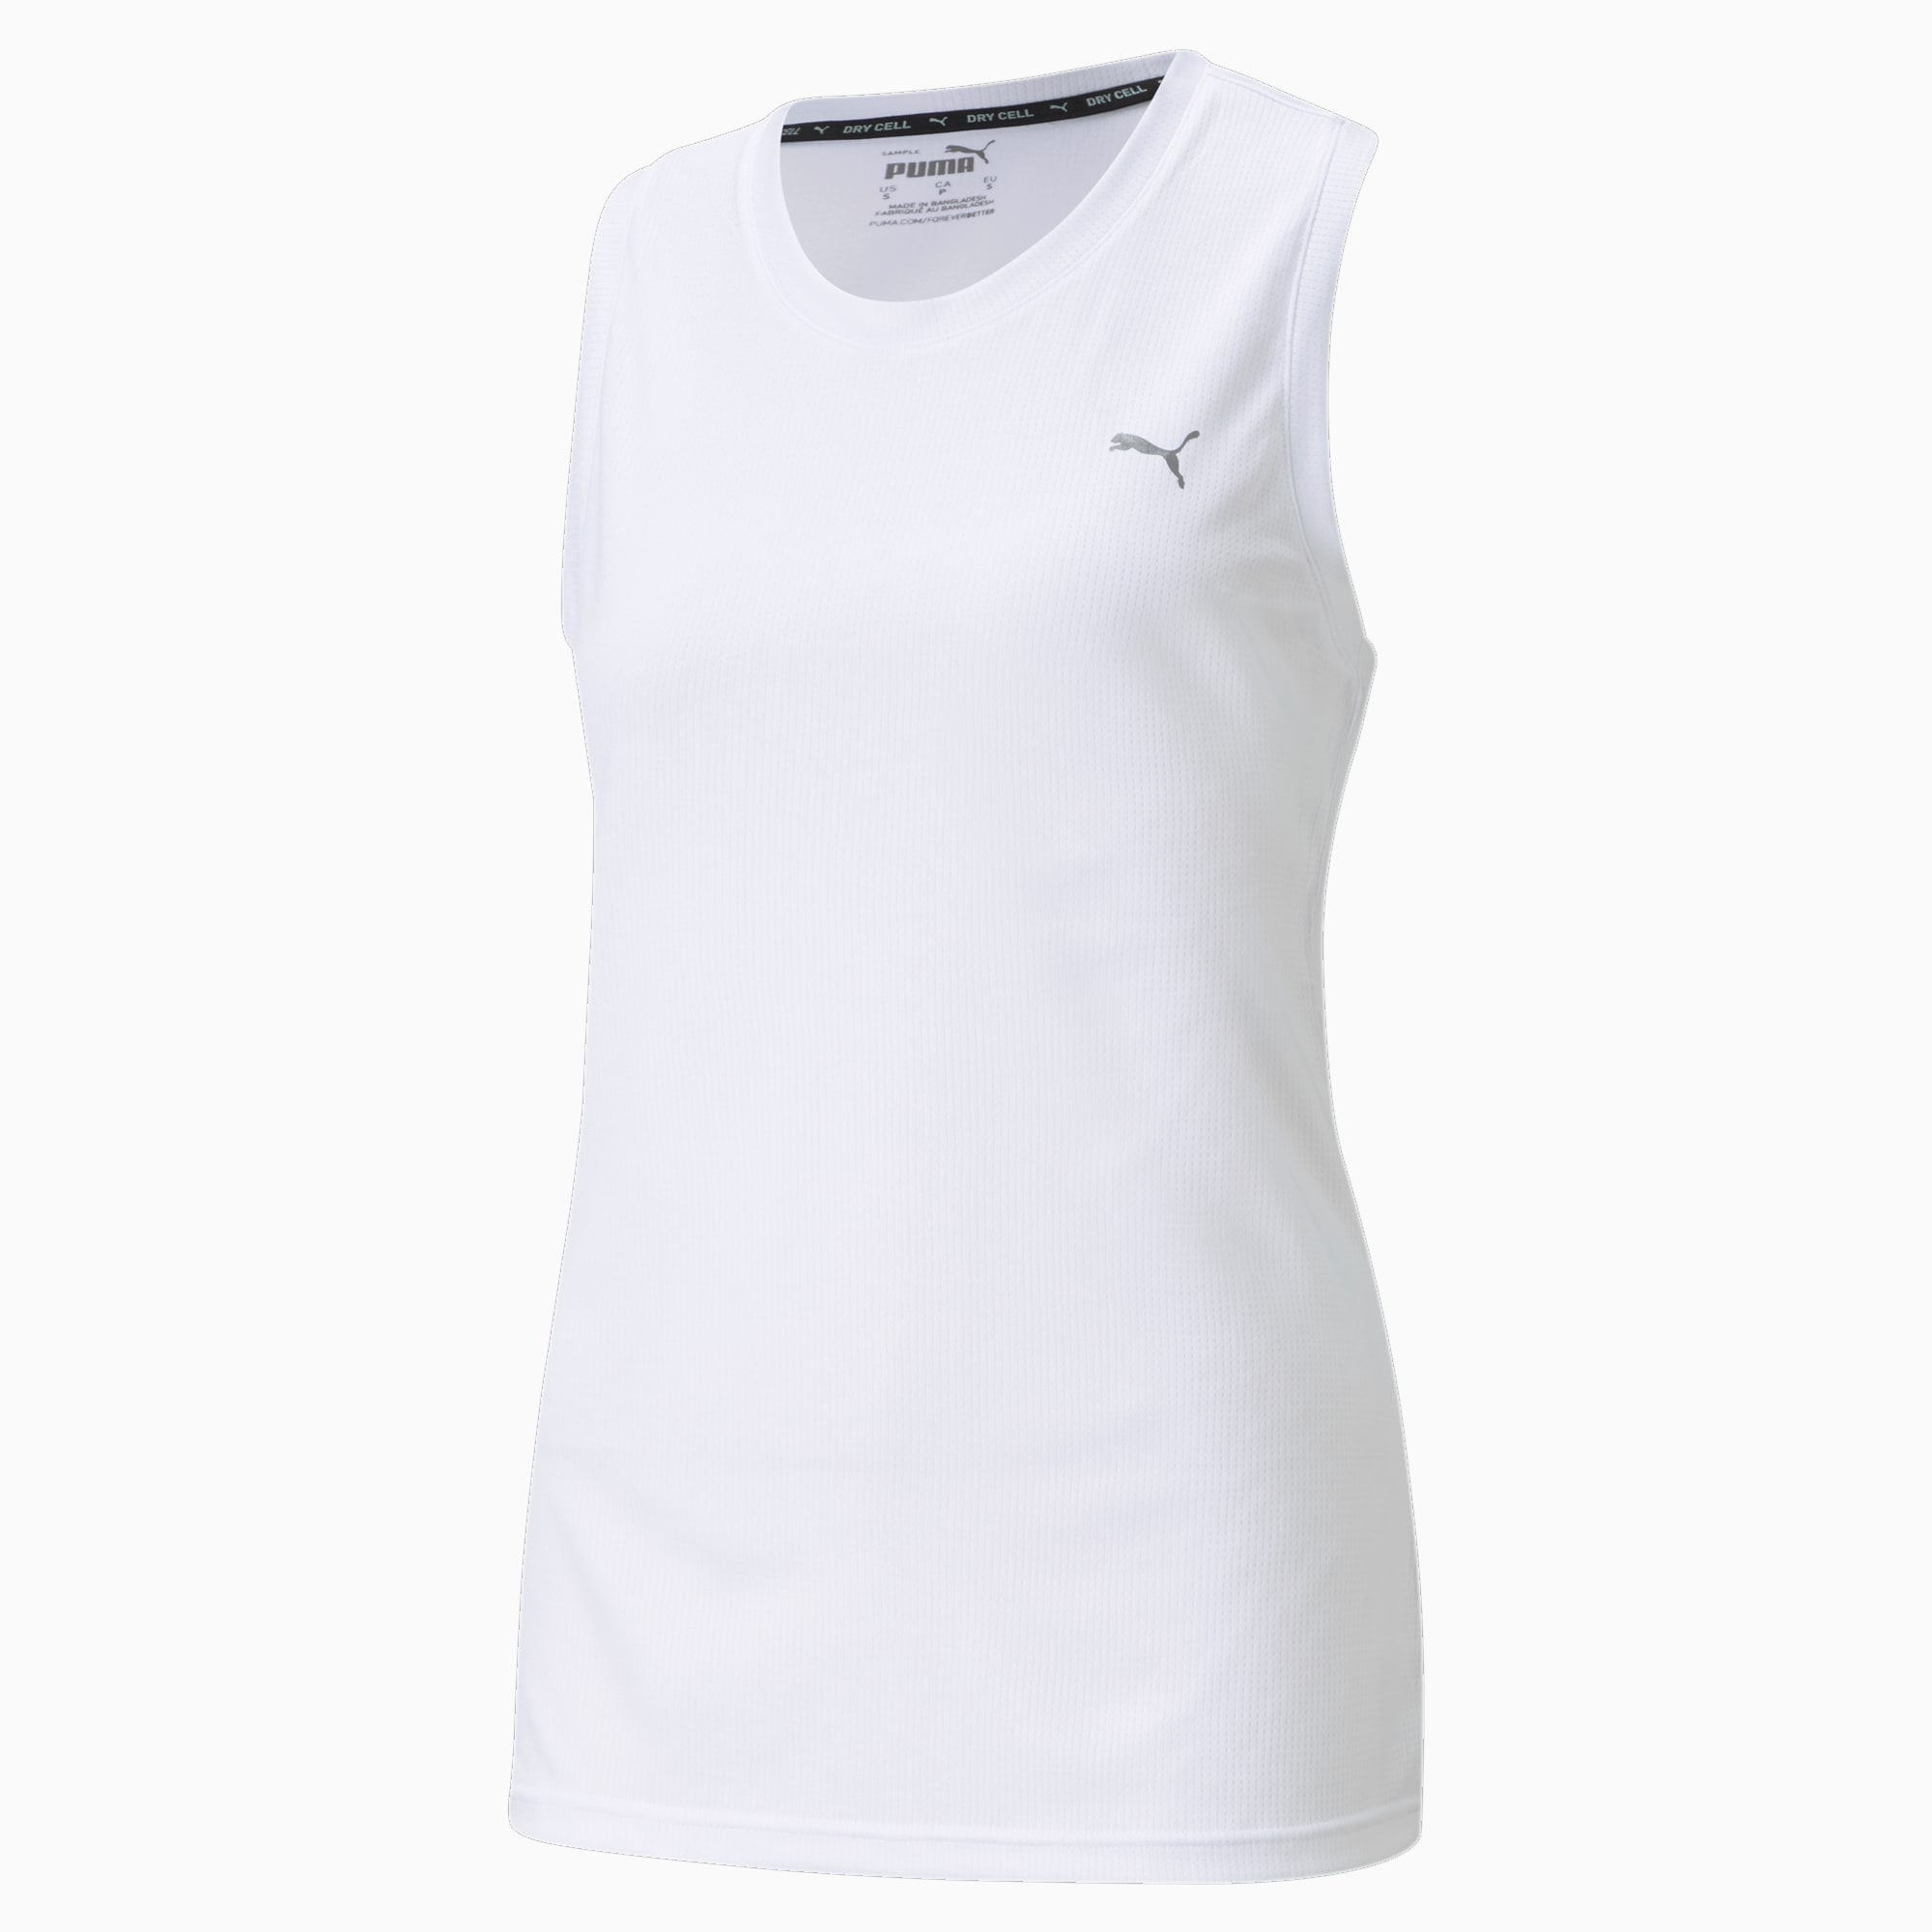 PUMA Performance Women's Training Tank Top Shirt, White, Size M, Clothing